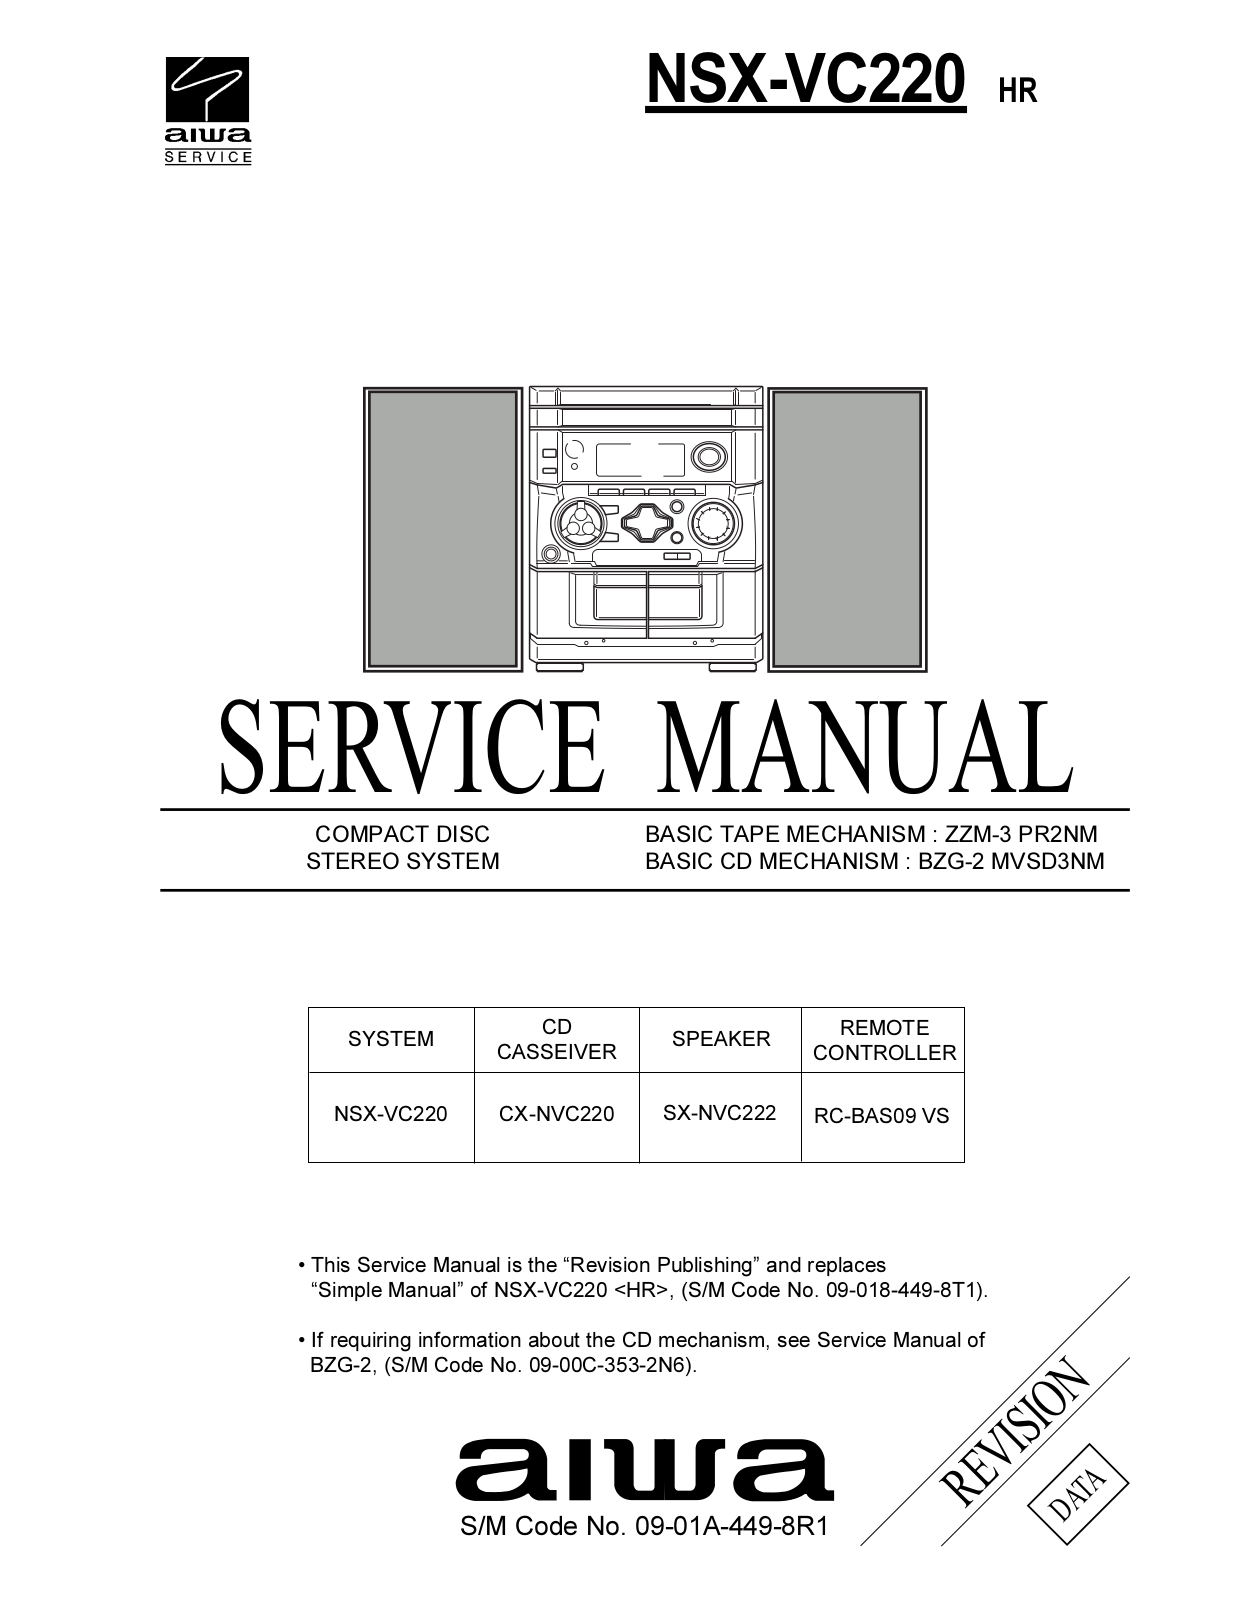 Aiwa NSX-VC220 Service Manual